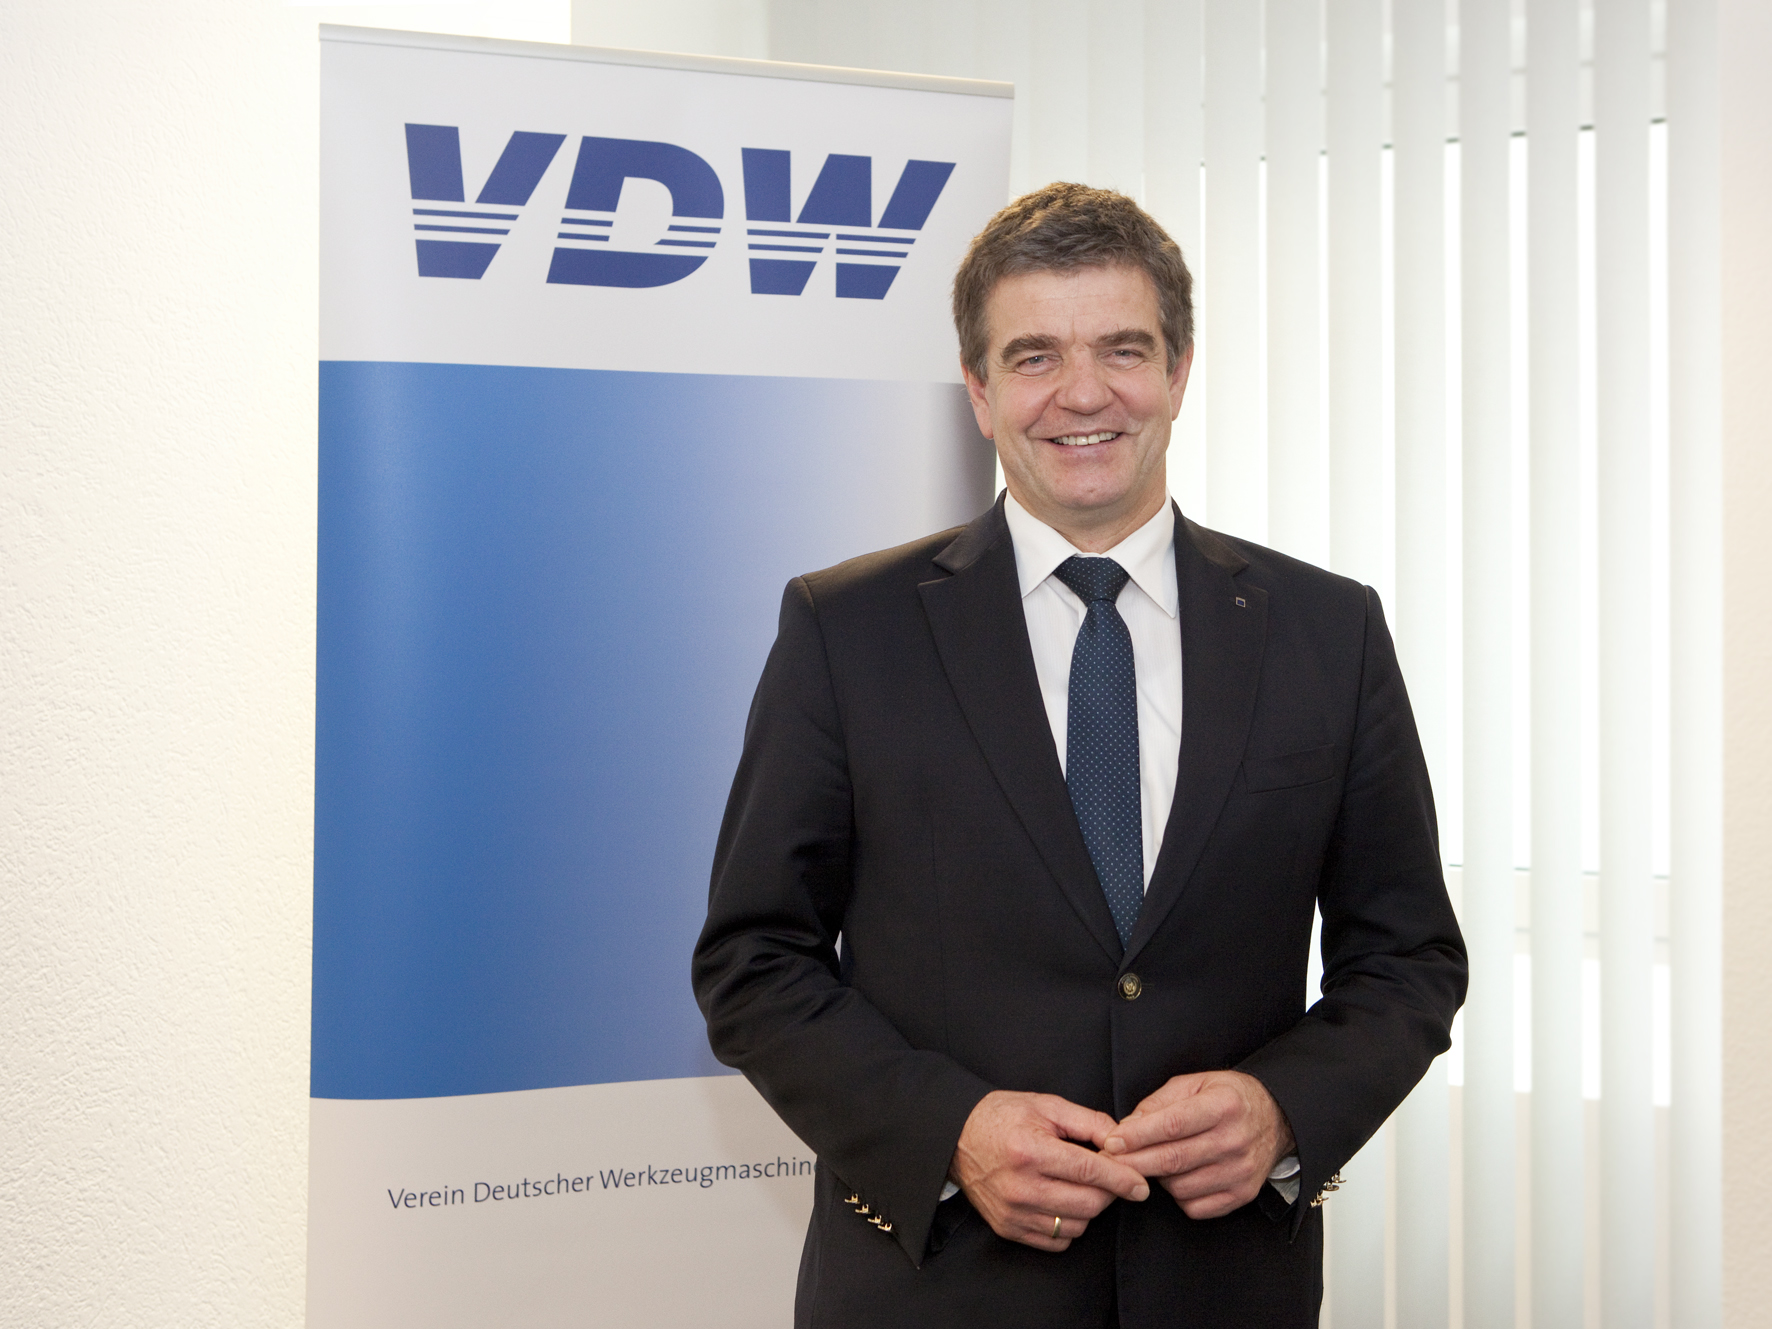 VDW, Dr Prokop, Germany, machine tools